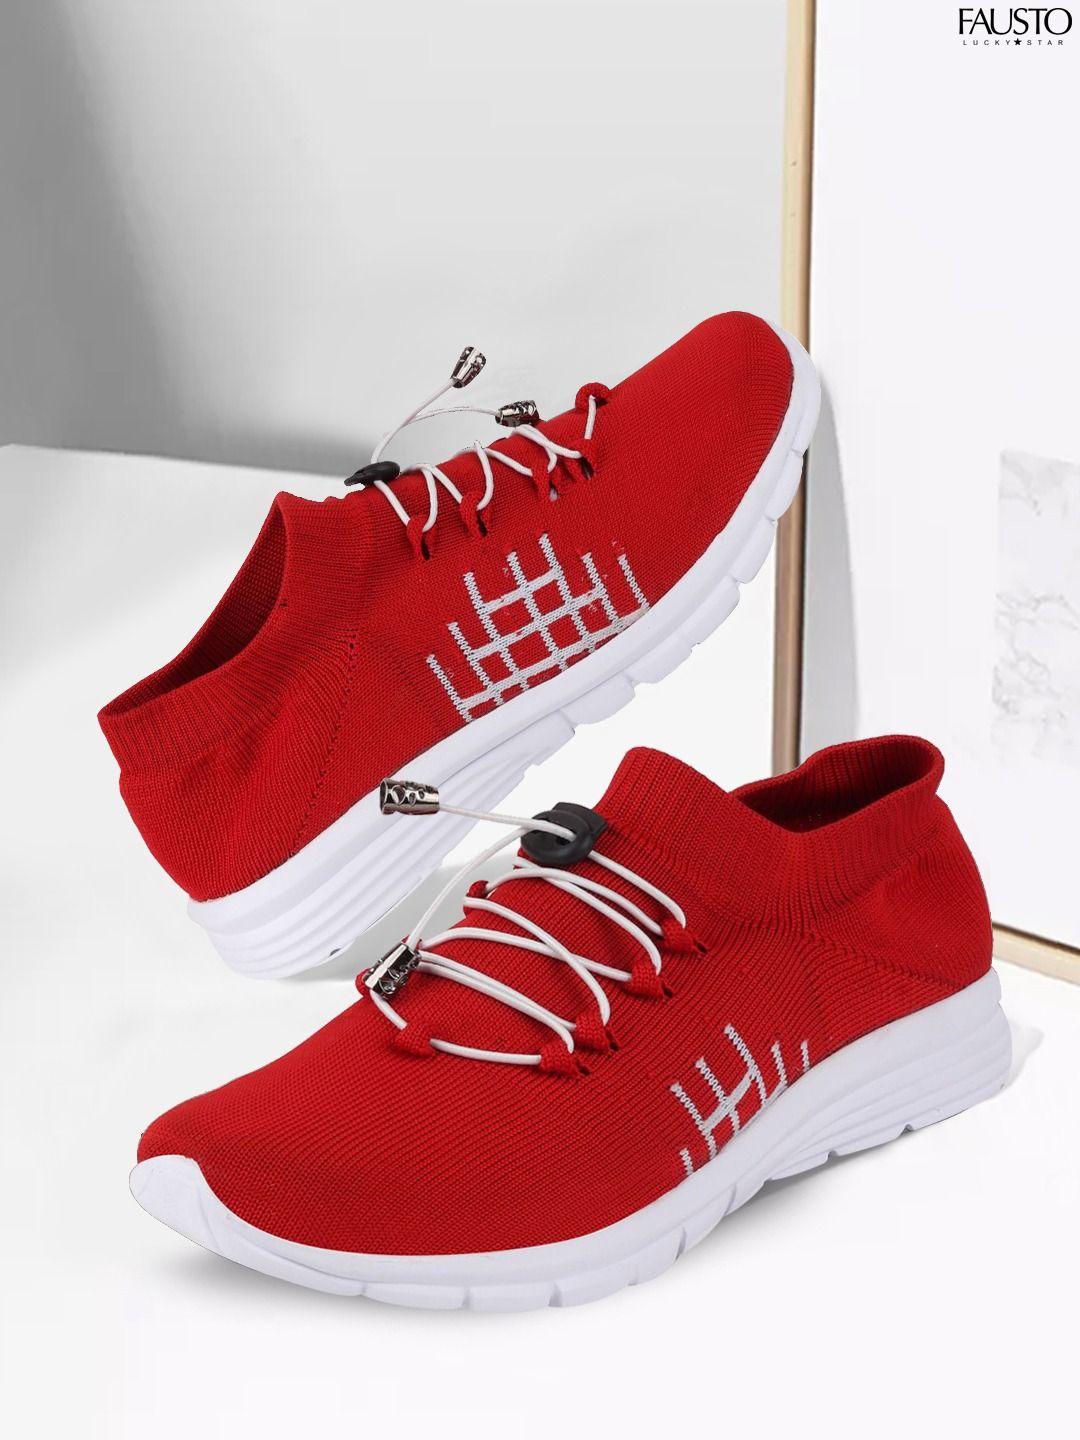 fausto-men-red-mesh-running-non-marking-shoes